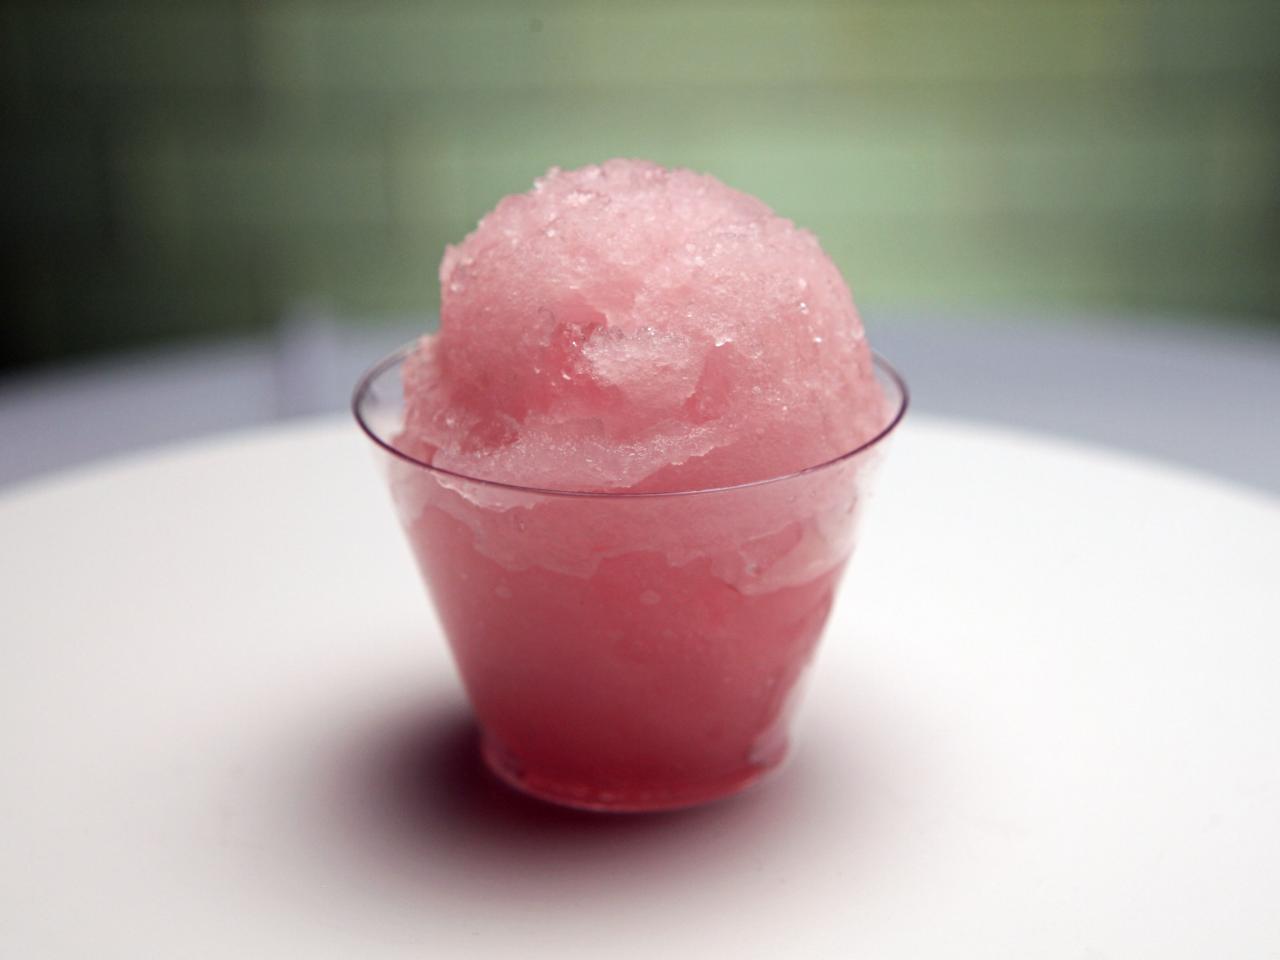 Strawberry Lemonade Dream Shave Ice